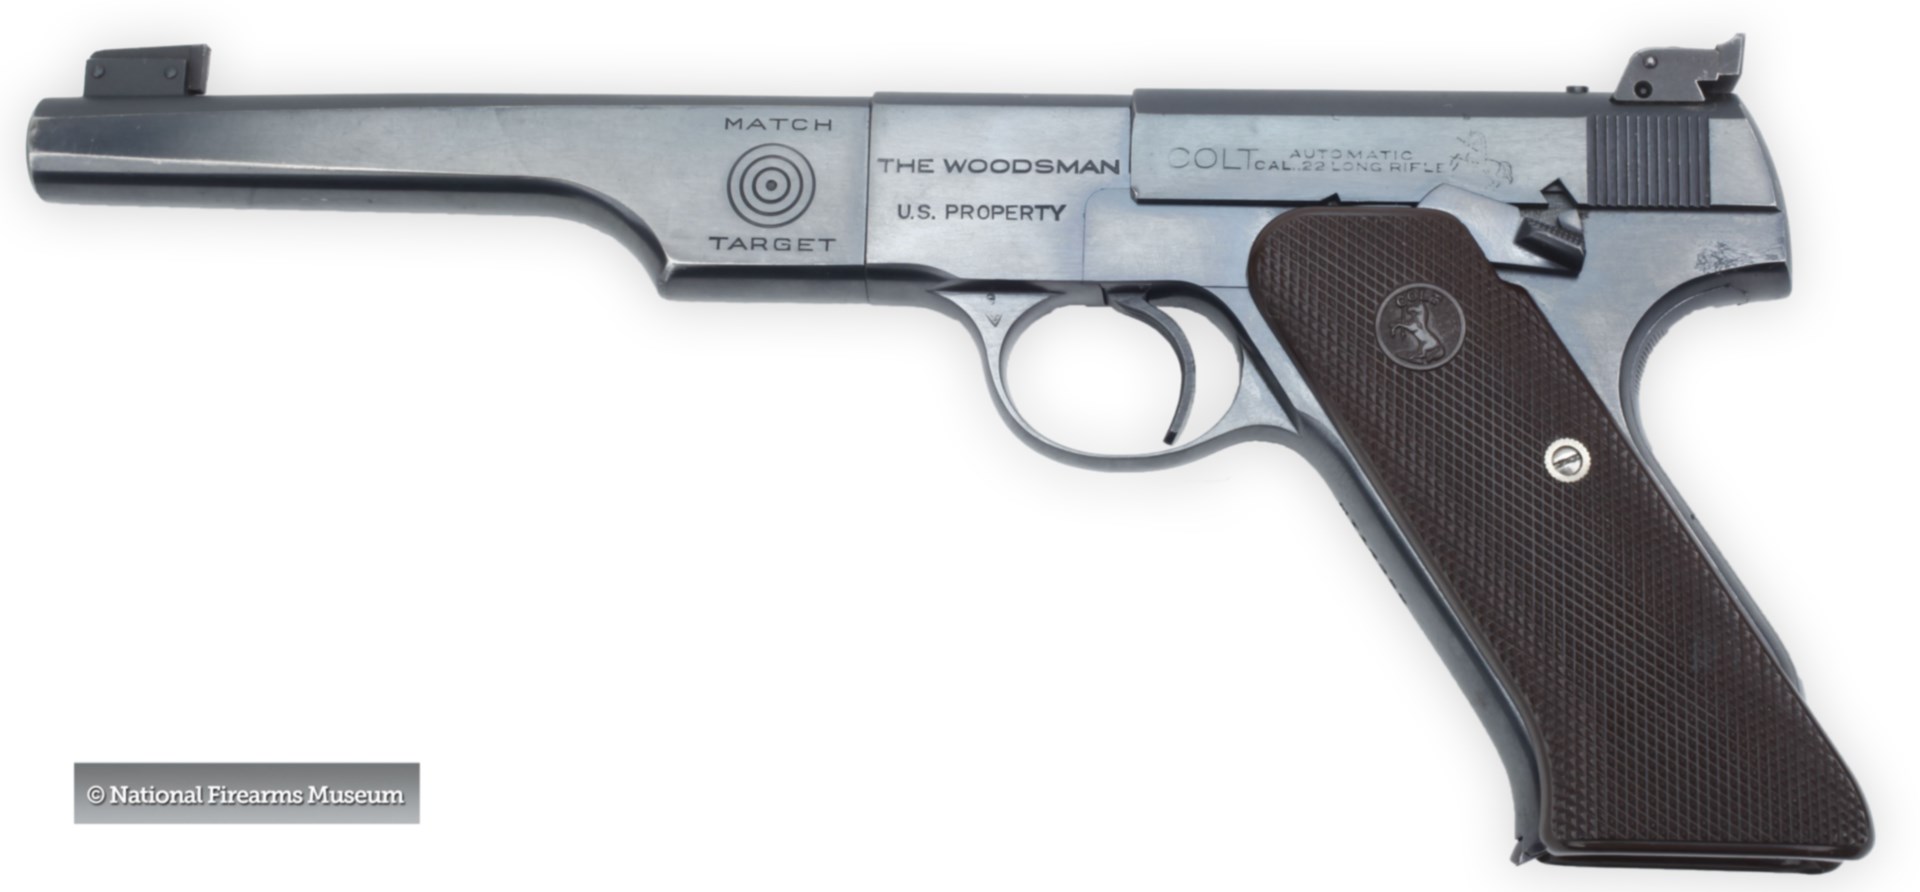 Colt Target Woodsman handgun pistol left-side view nra museum stamp